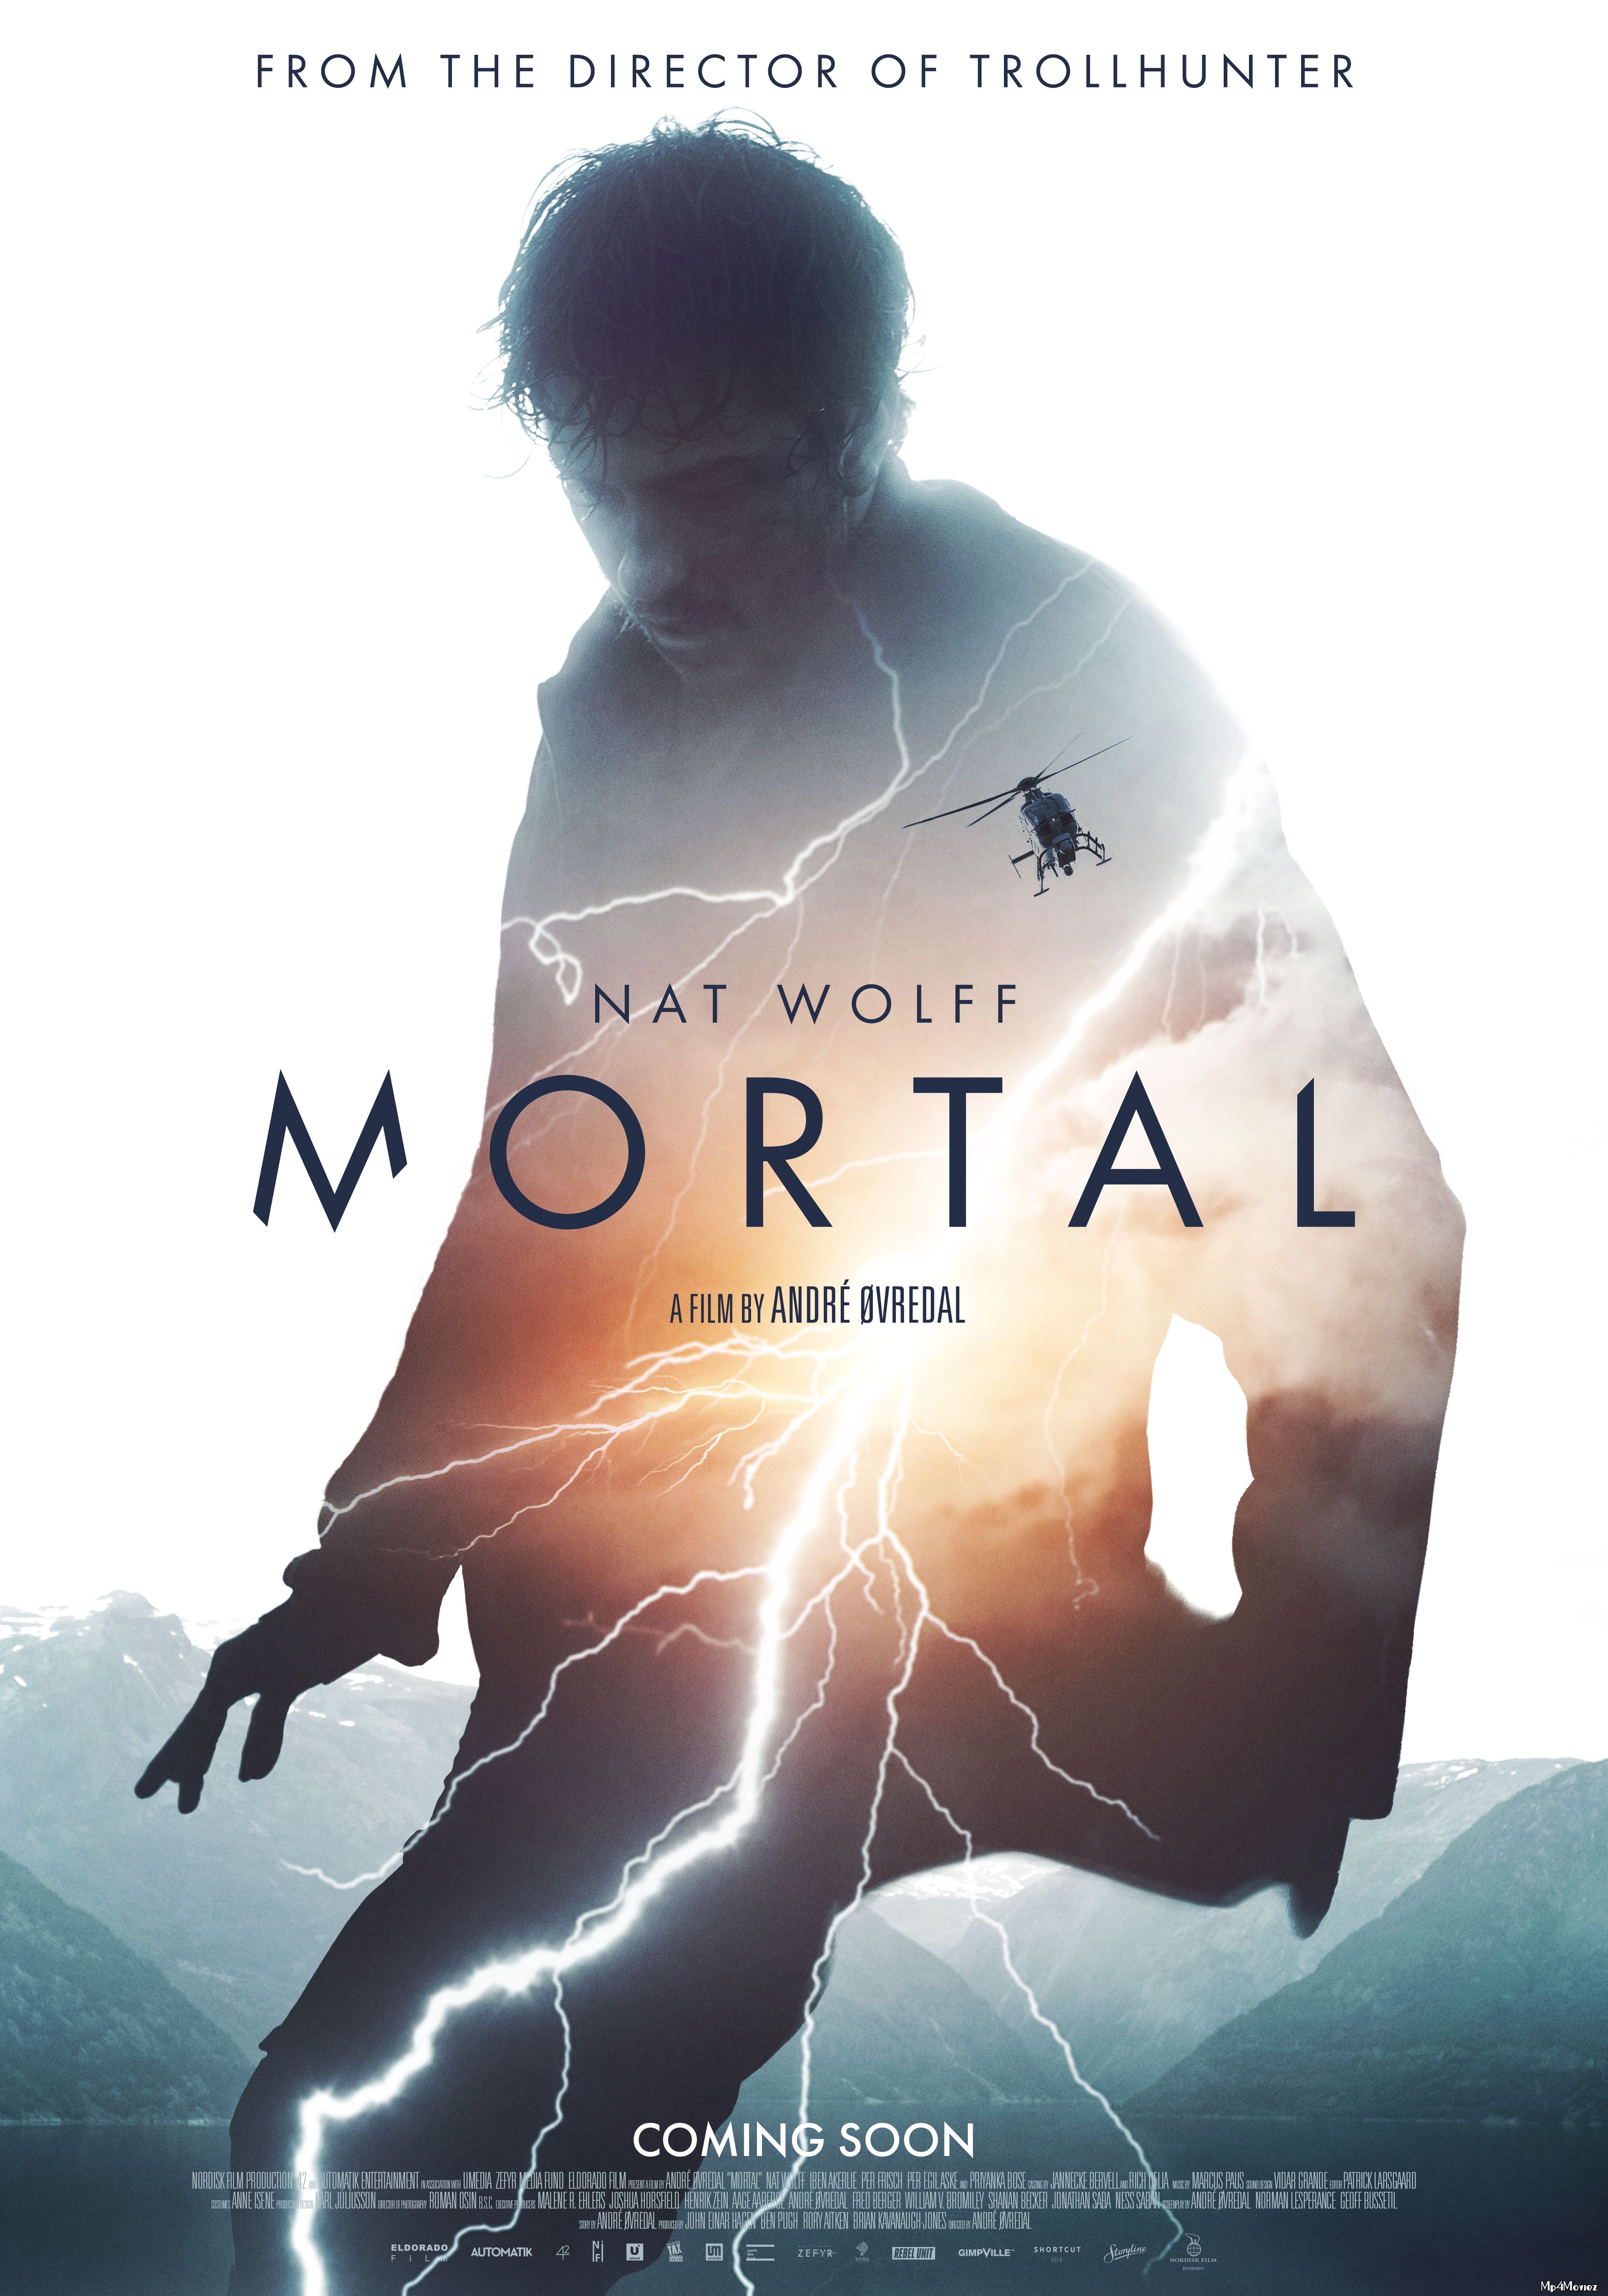 Mortal 2020 English Full HD Movie download full movie